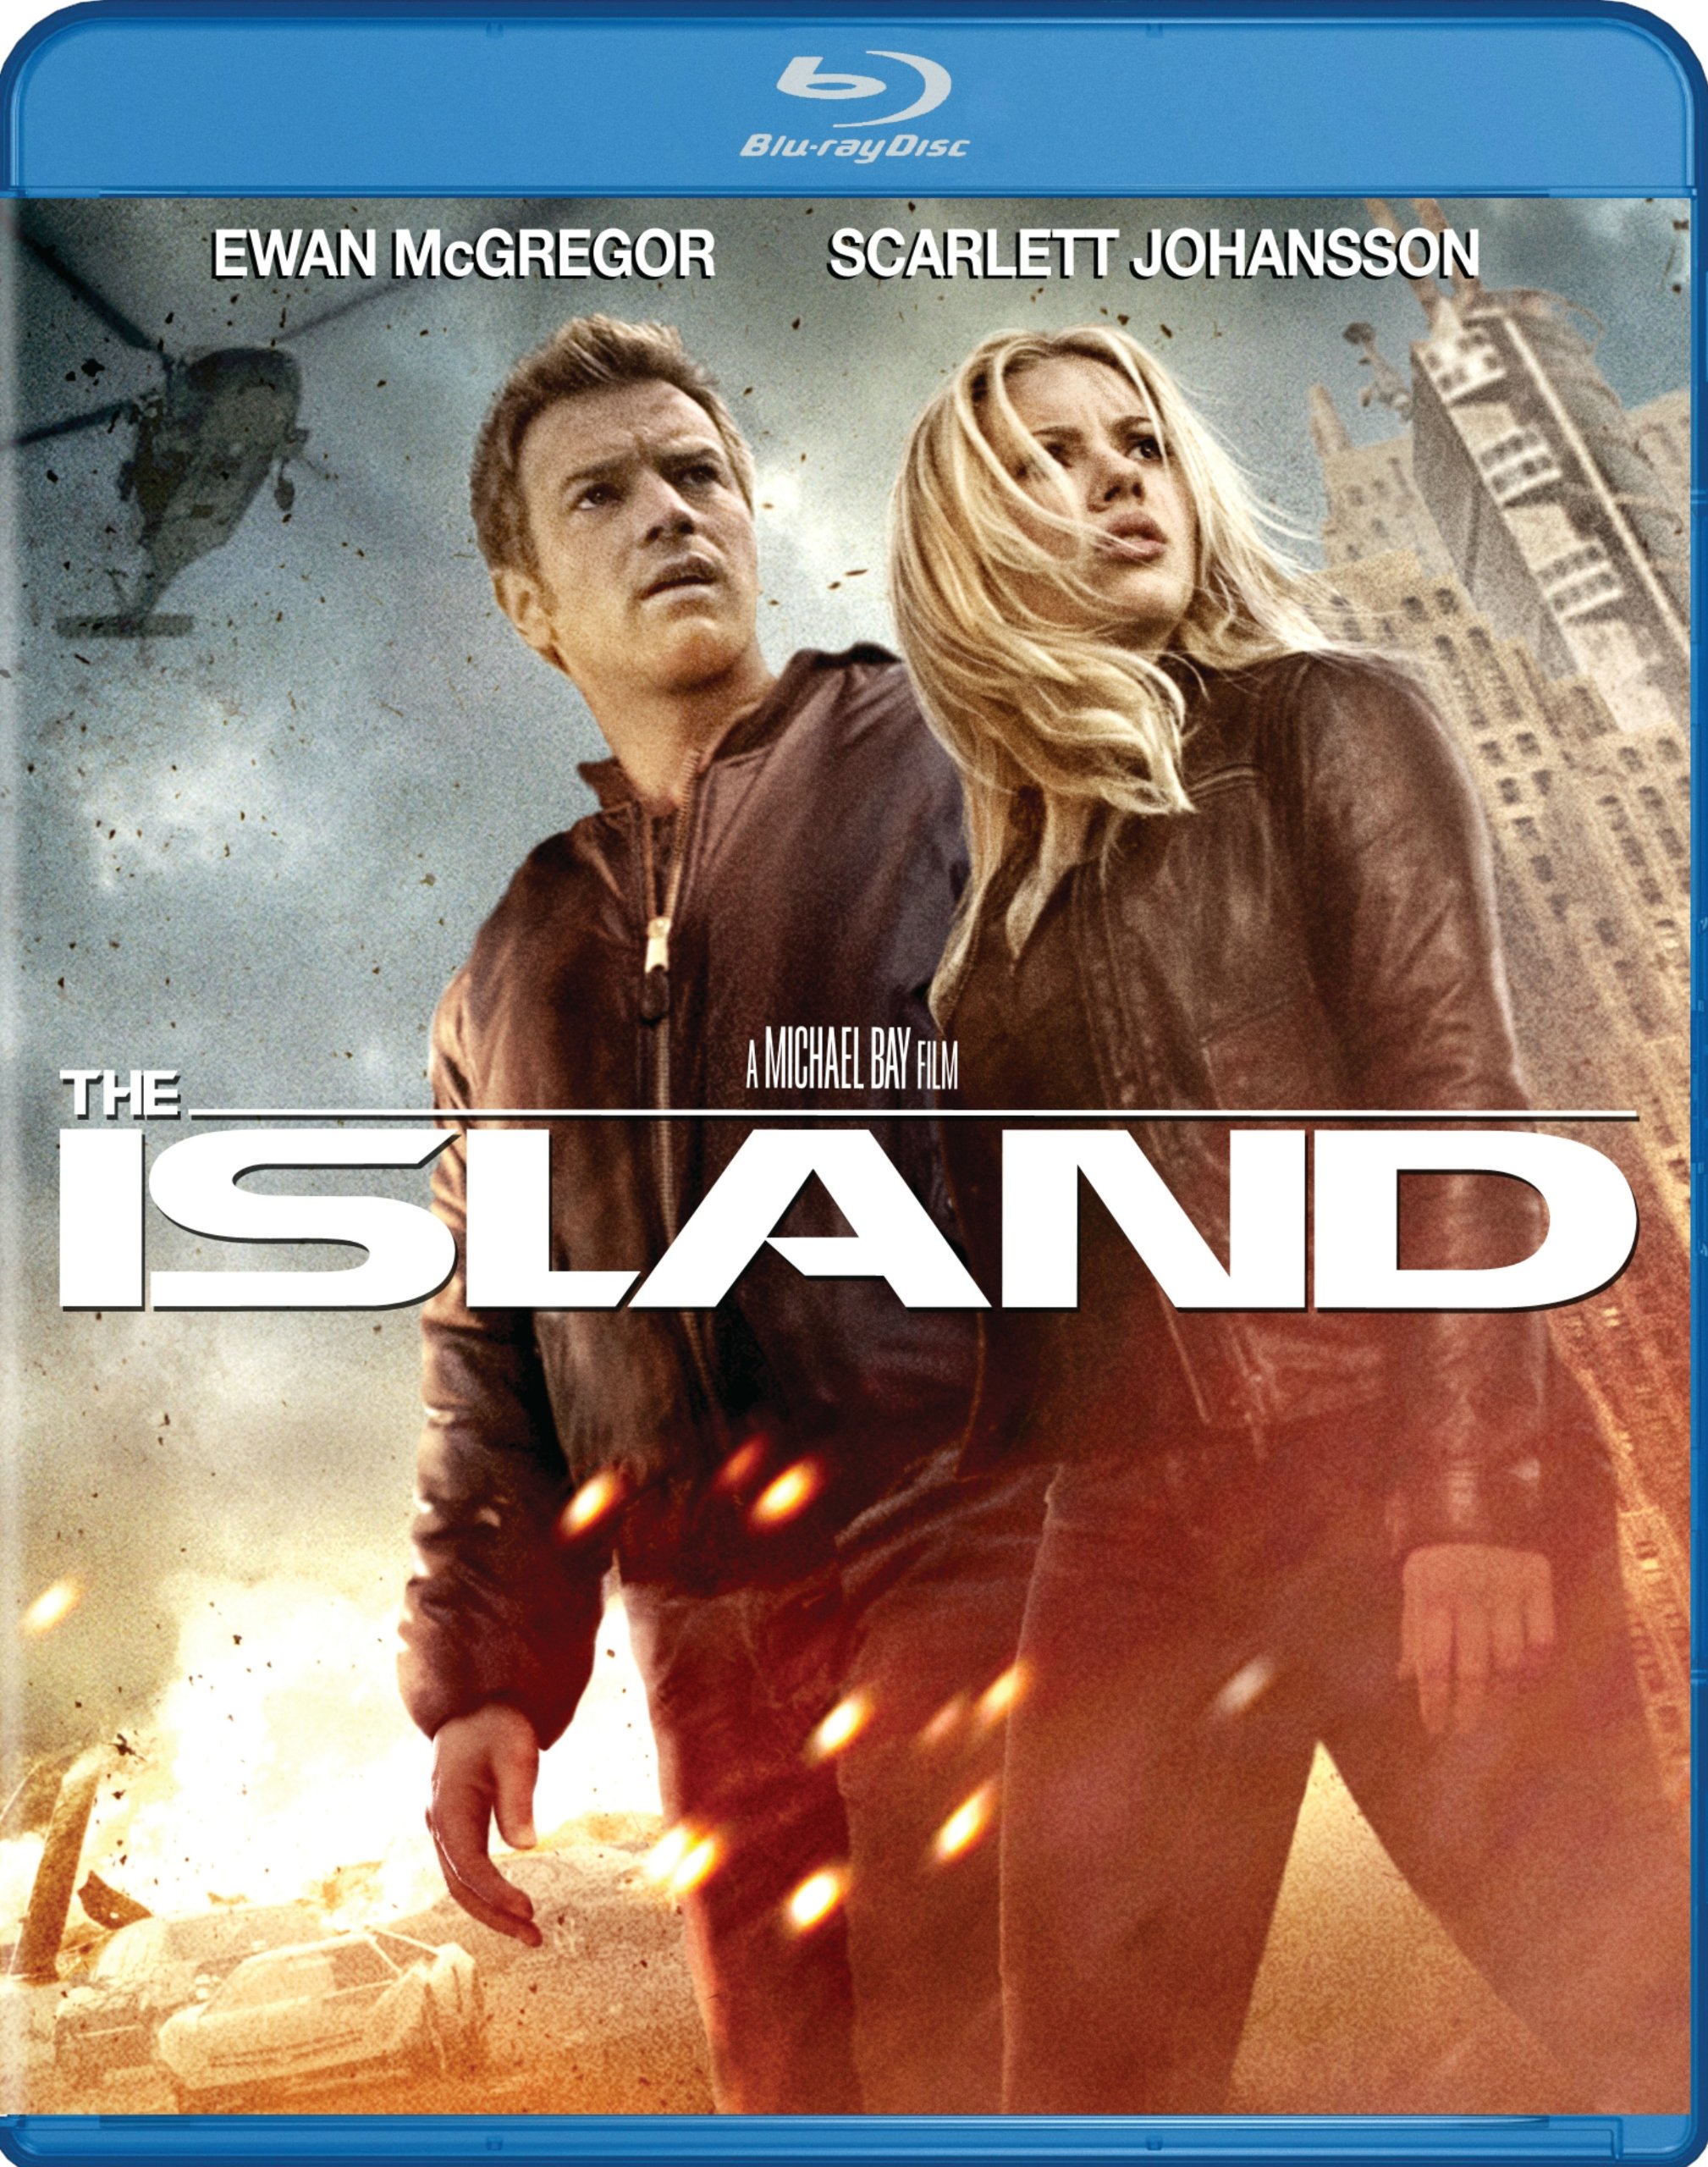 The Island DVD Release Date December 13, 2005